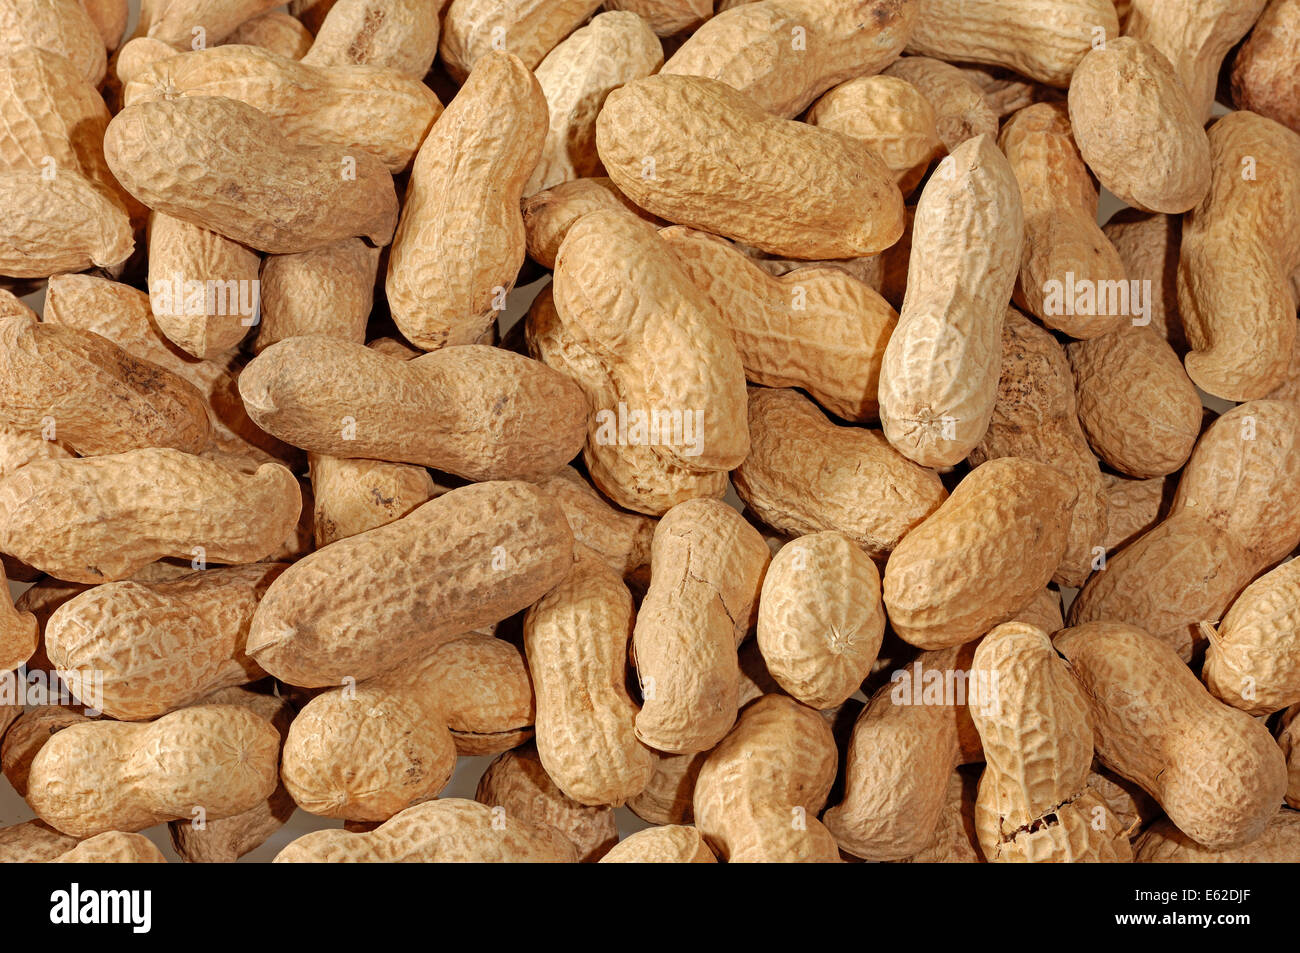 Peanuts or Groundnuts (Arachis hypogaea) Stock Photo